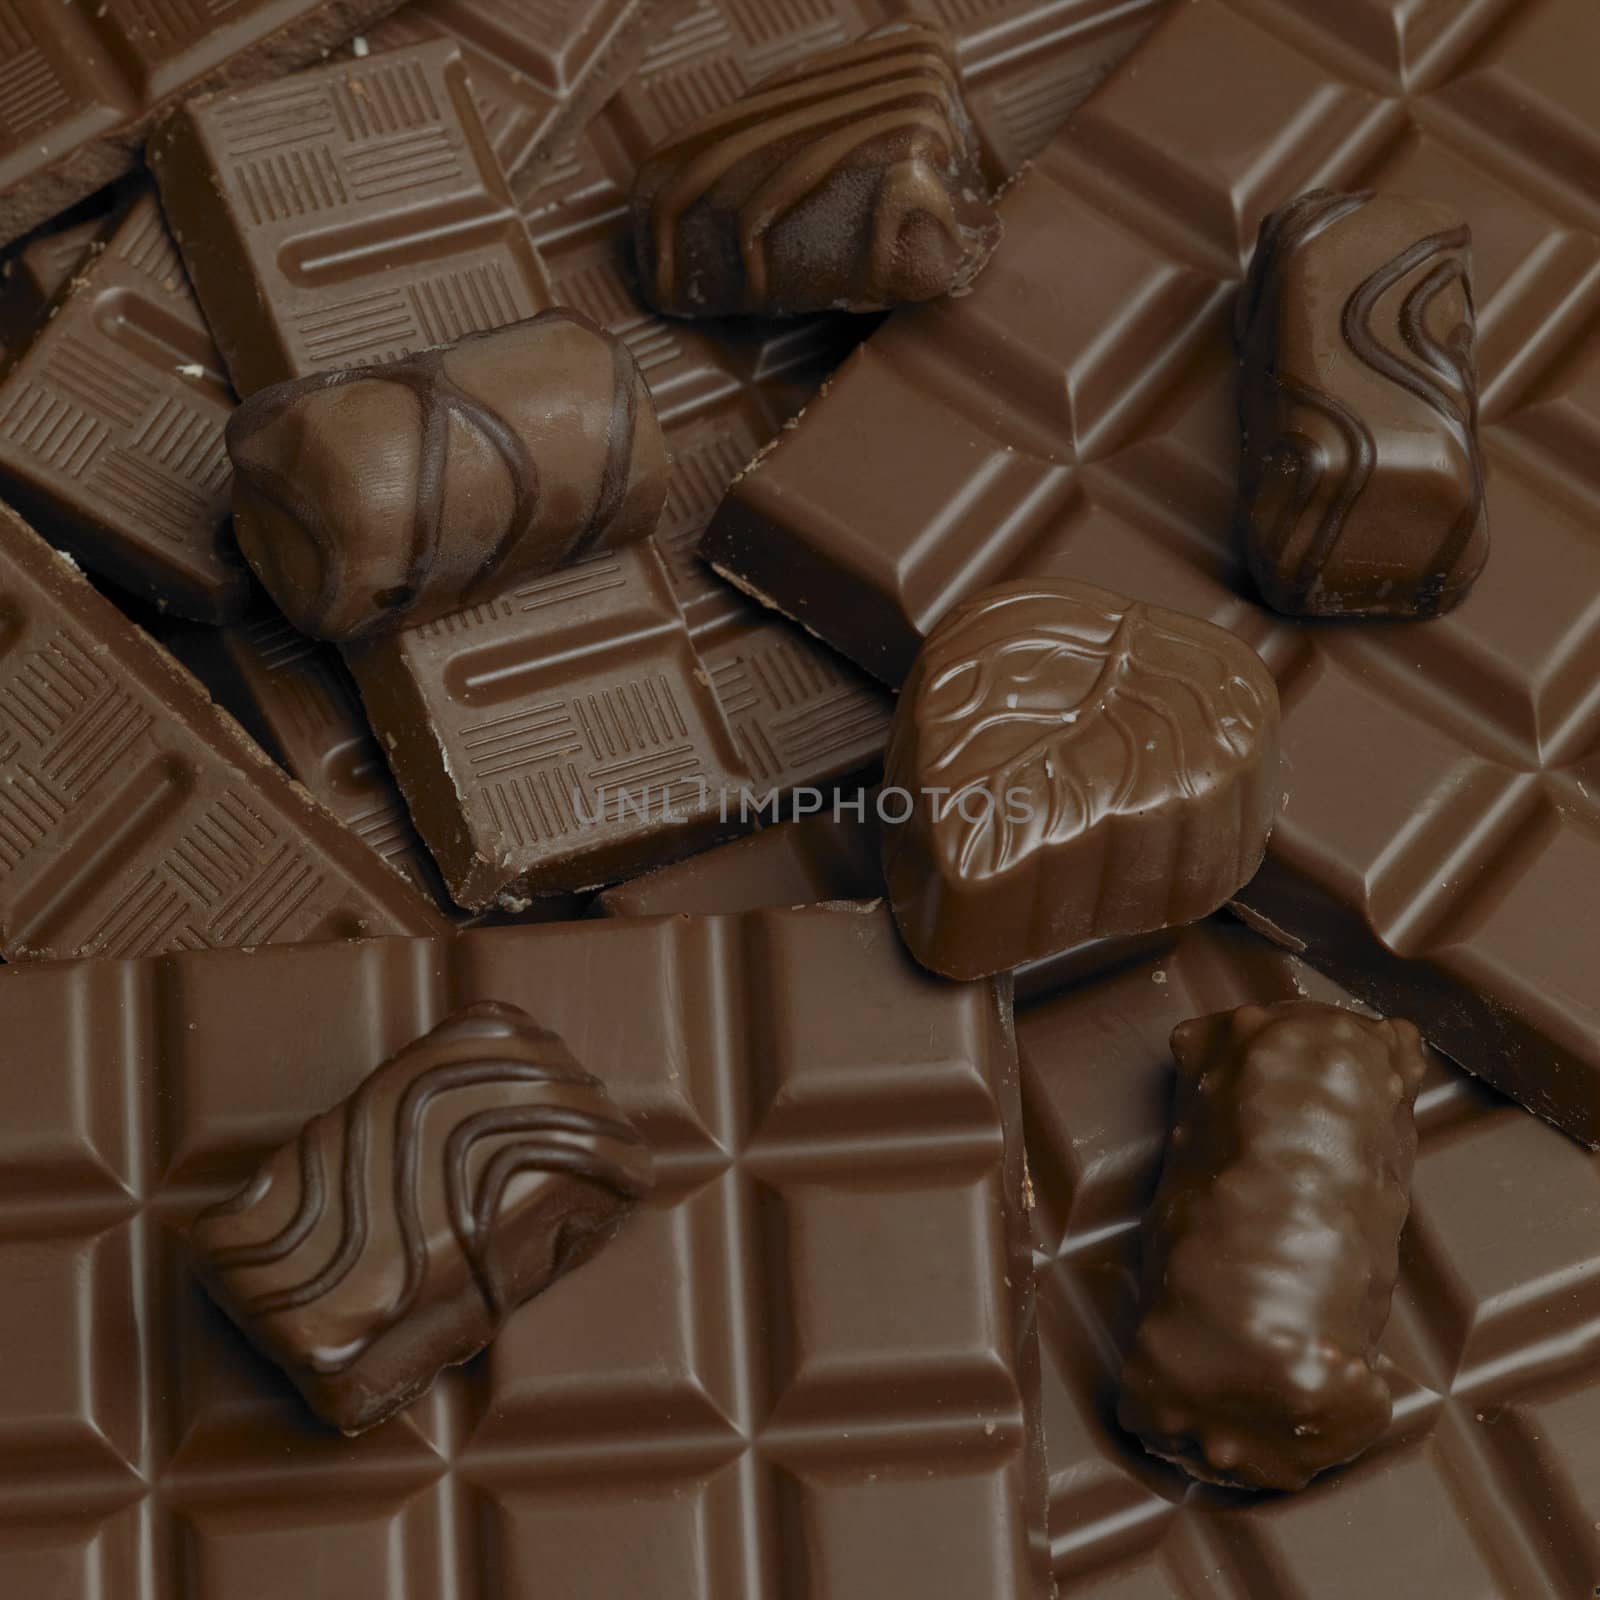 chocolate still life by phbcz